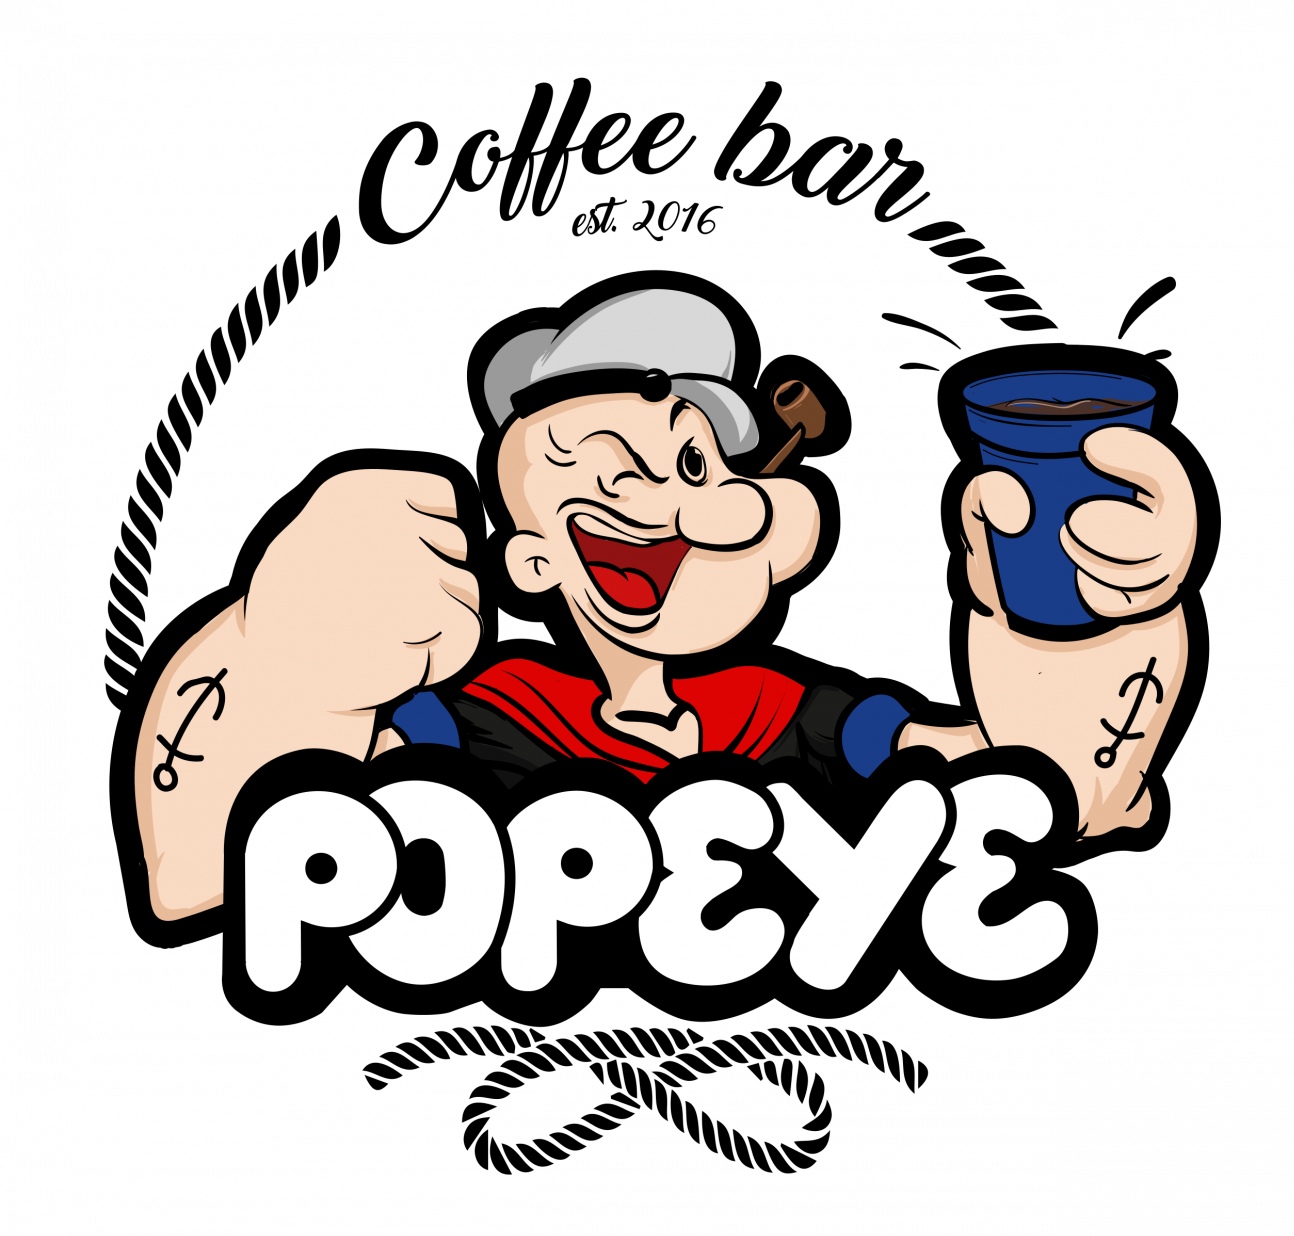 Coffee Bar Popeye